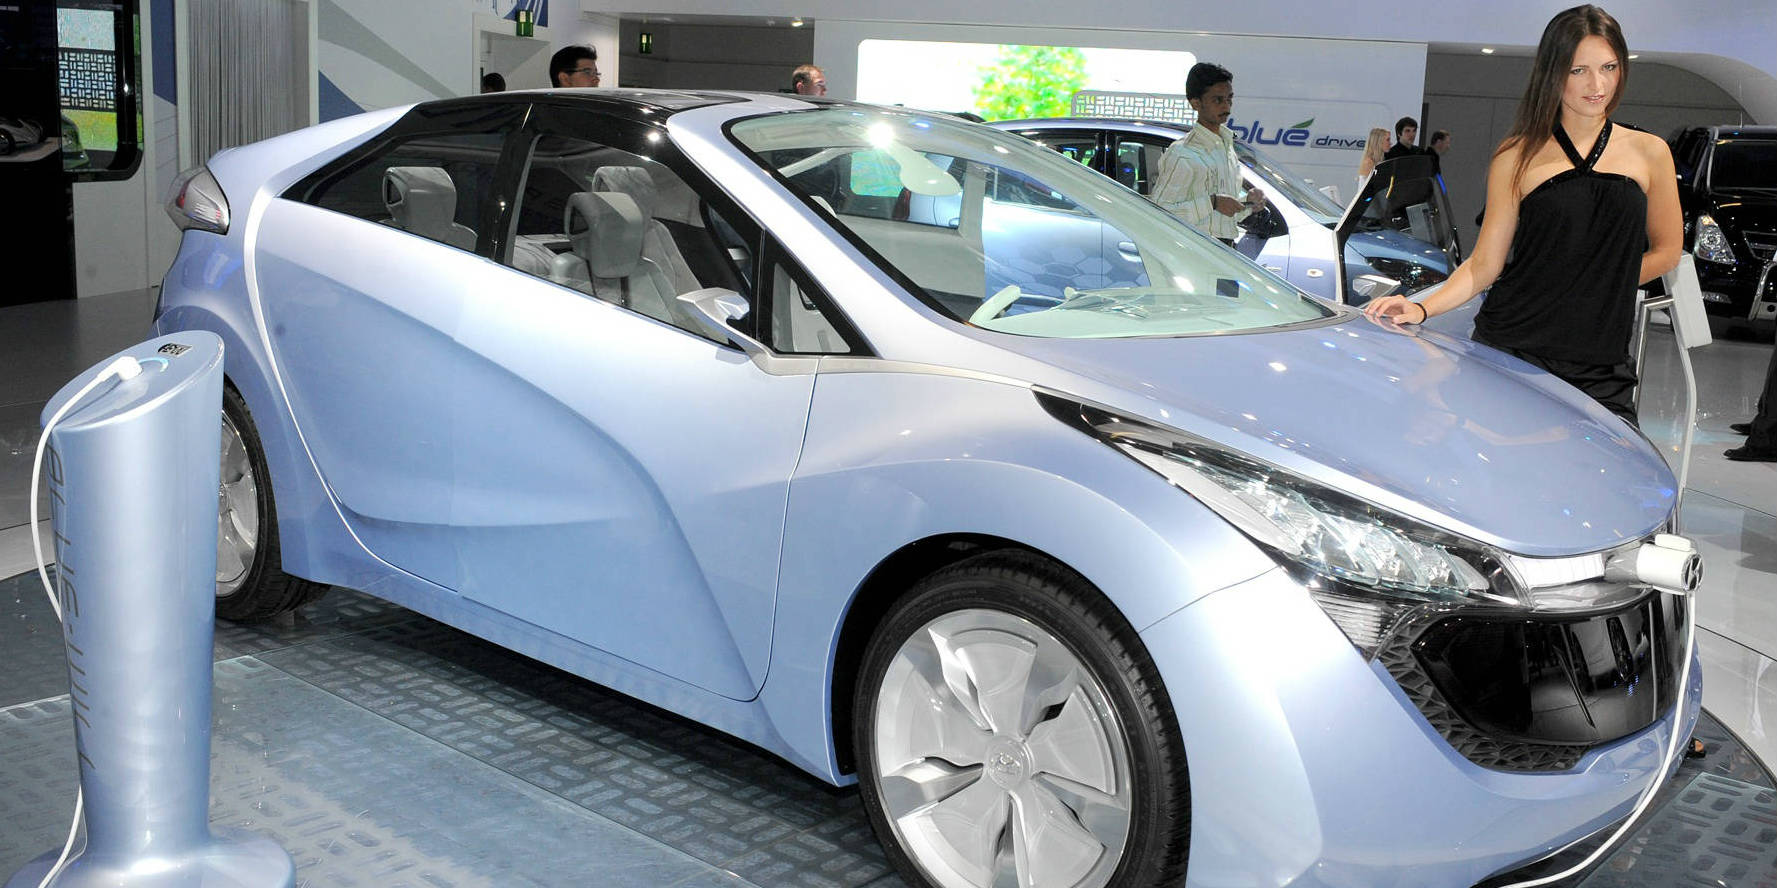 Hyundai Concept Blue electric car usa